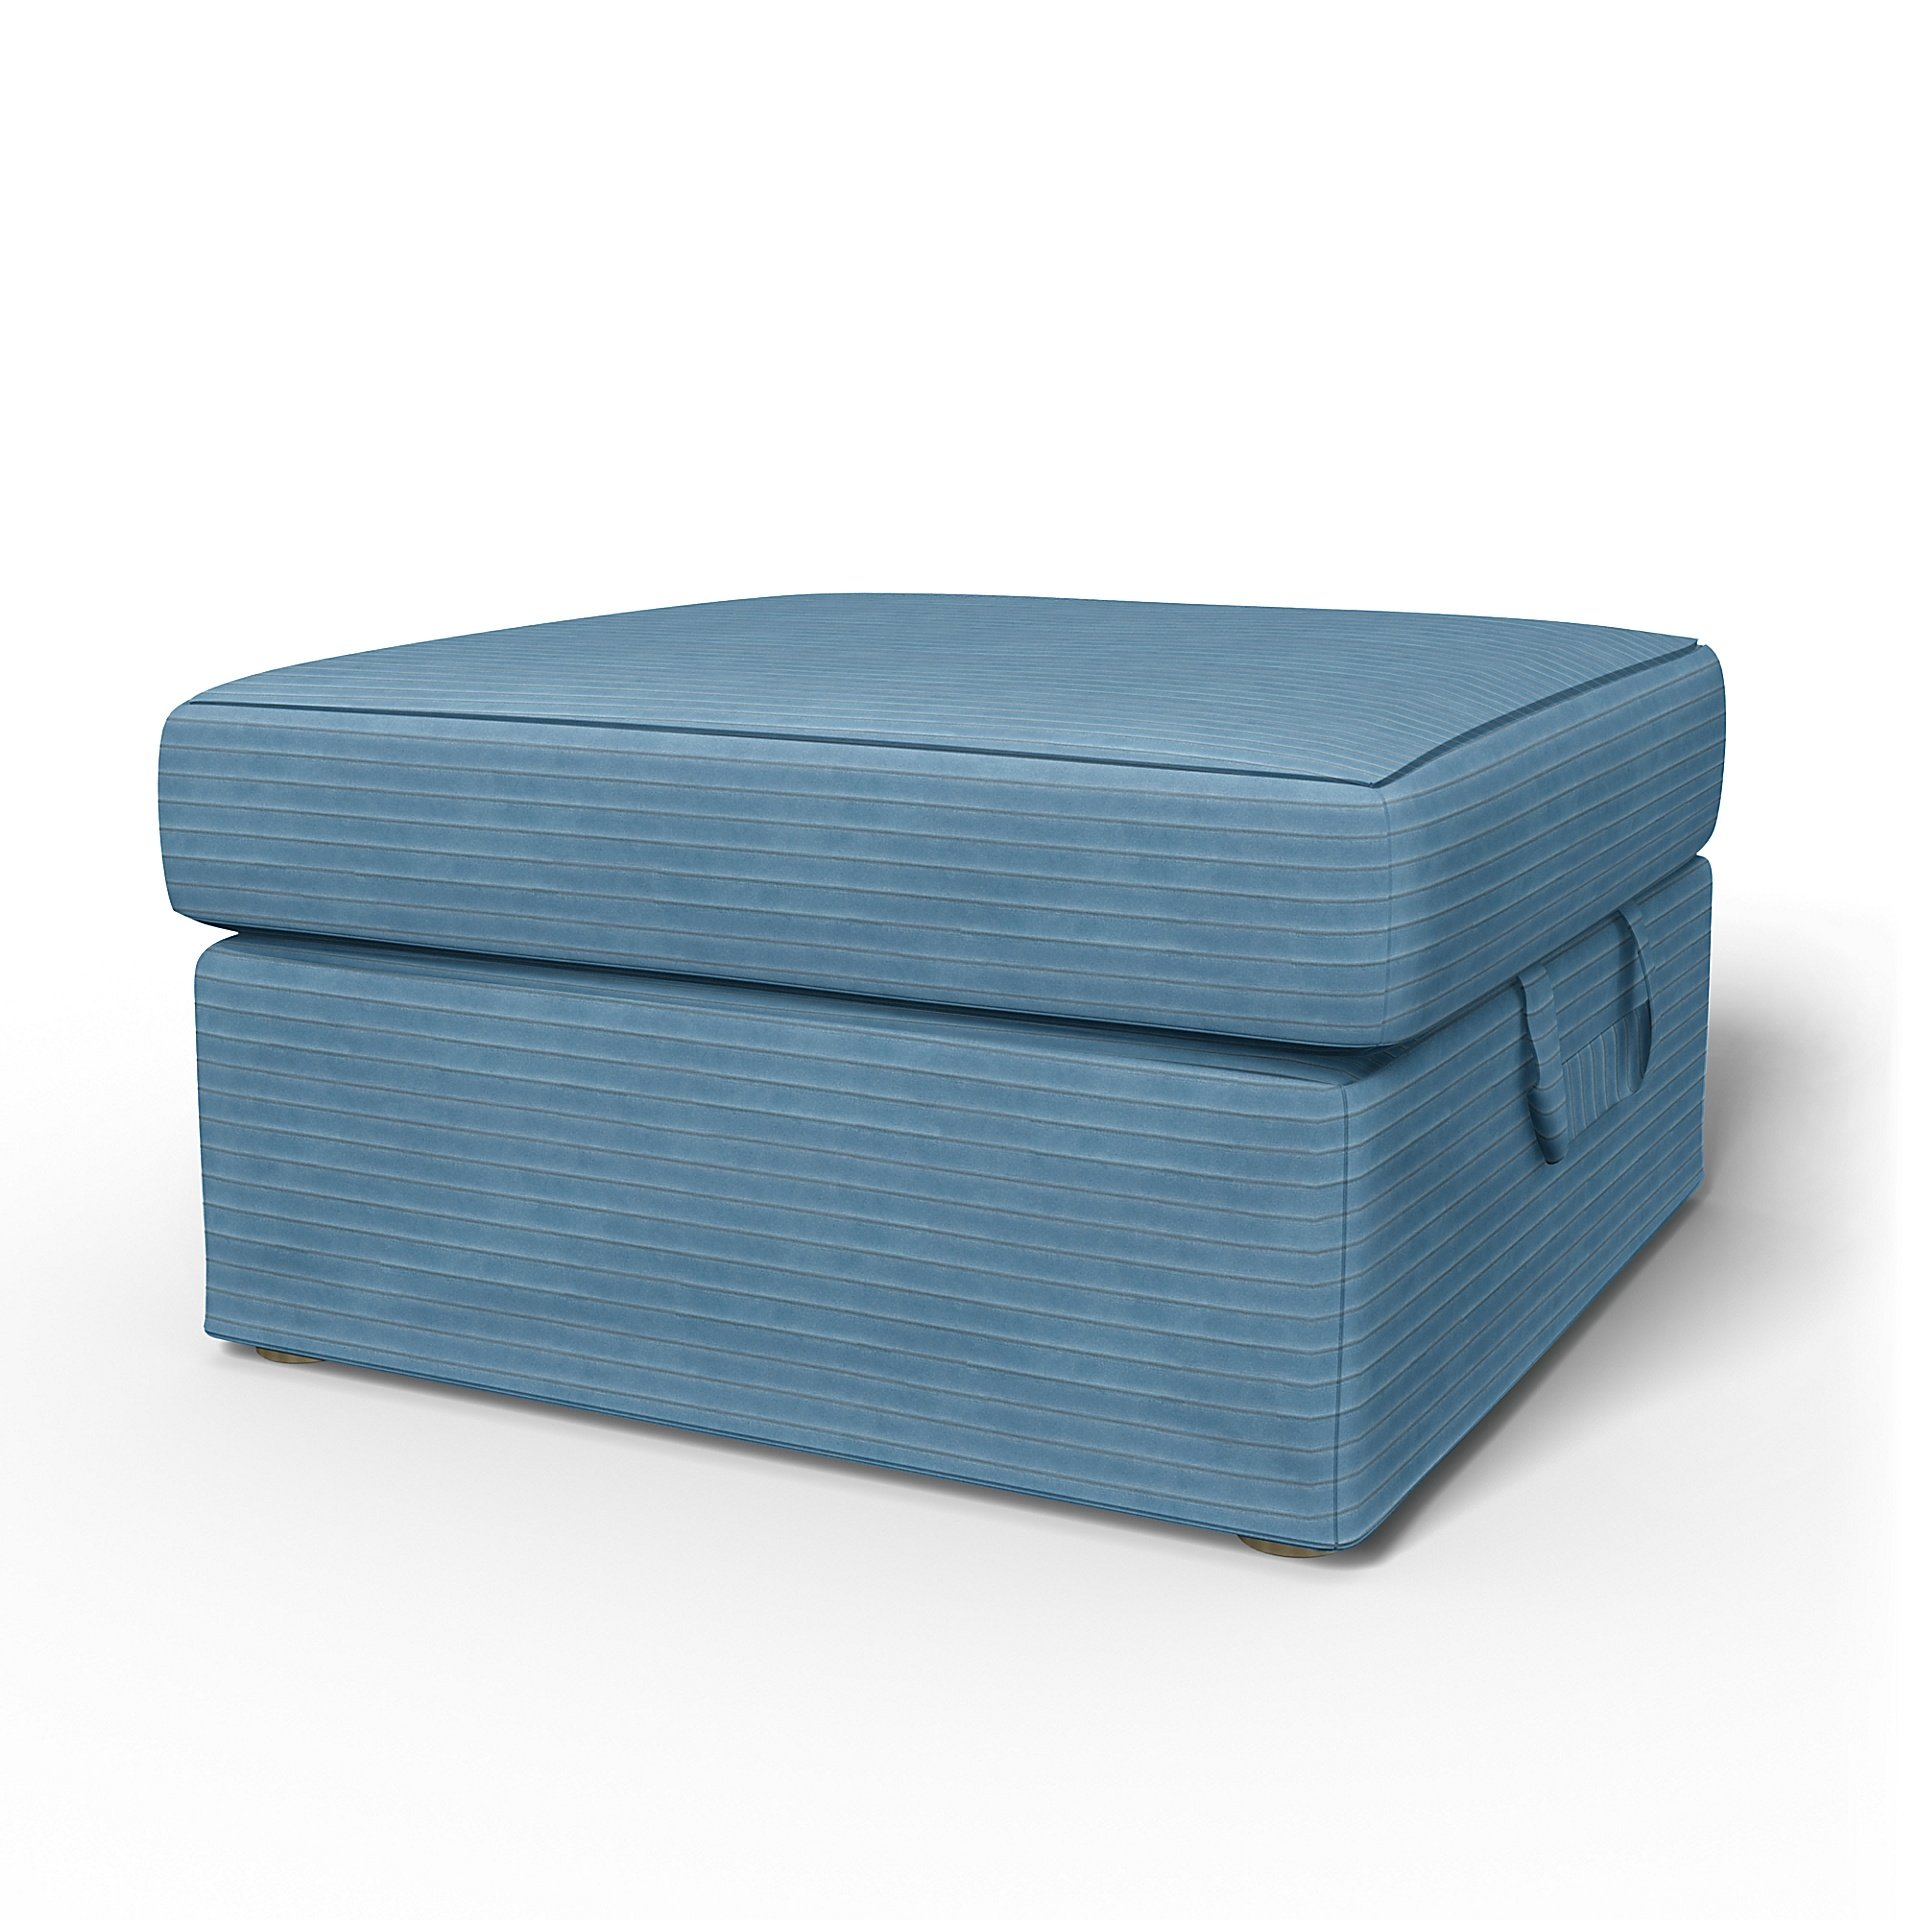 IKEA - Tomelilla Foto Footstool Cover, Sky Blue, Corduroy - Bemz